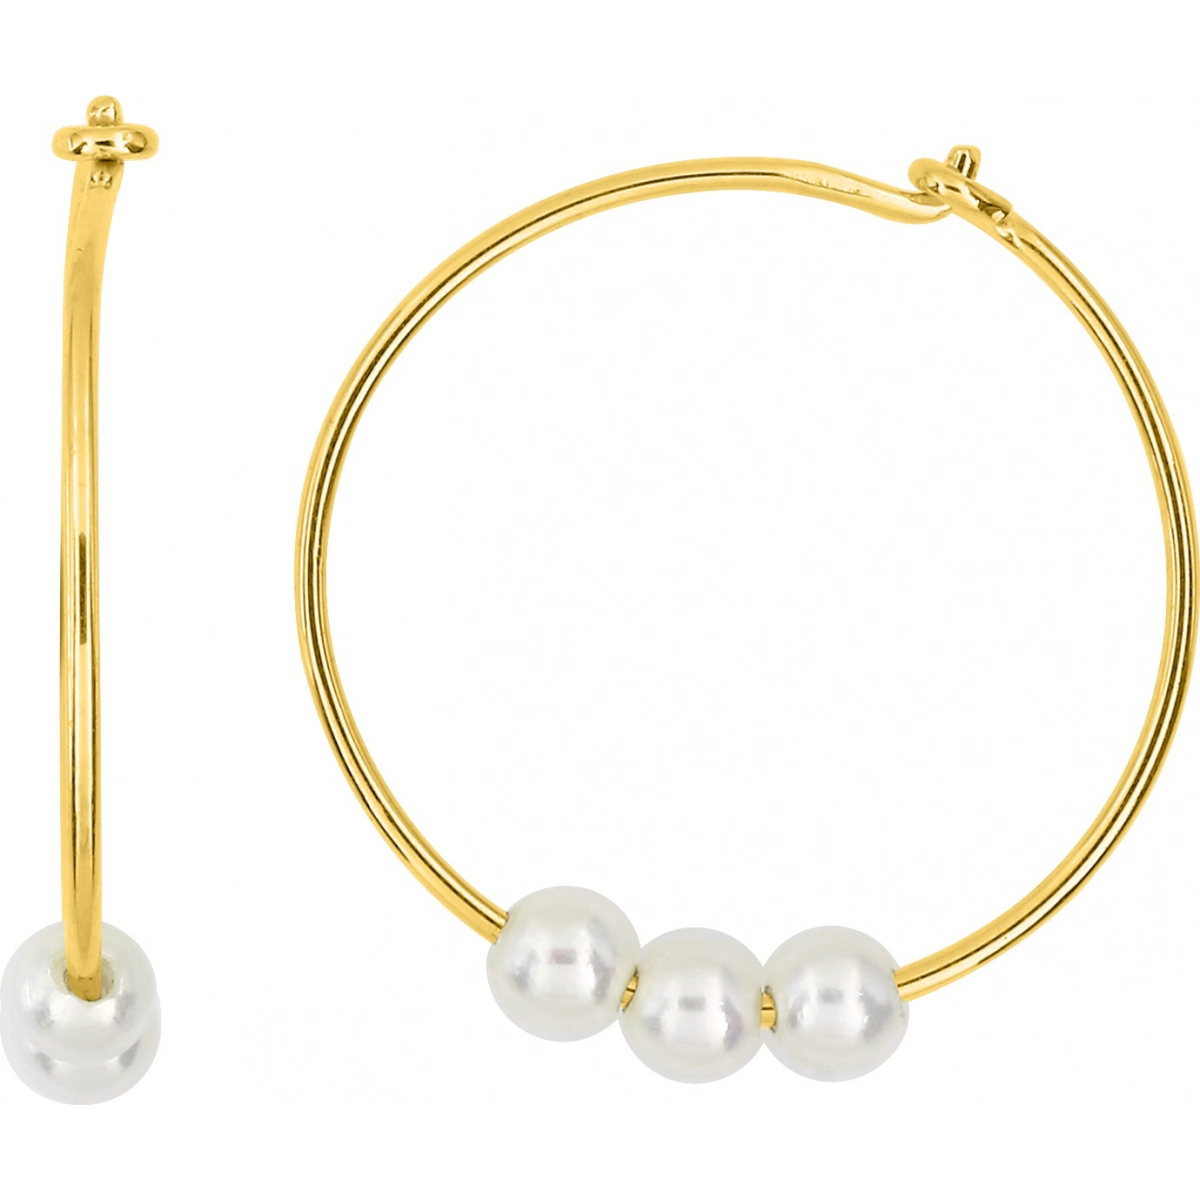 Earrings pair w. imitation pearl gold plated Brass Lua Blanca  258332 